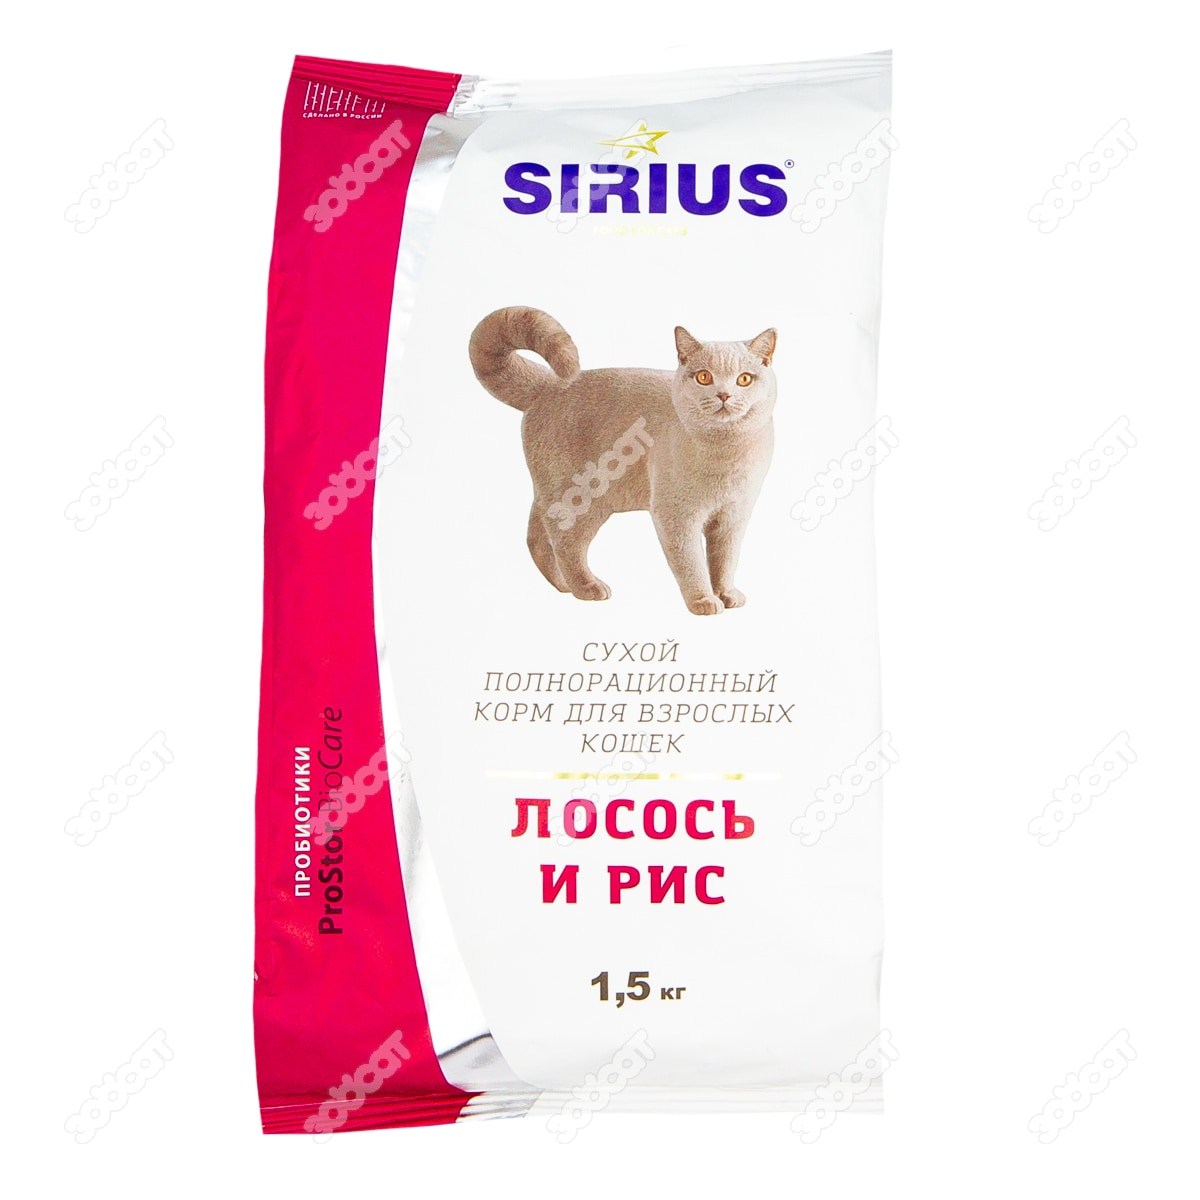 Сириус для кошек 10 кг купить. Sirius корм для кошек лосось 10 кг. Sirius лосось и рис сухой корм для кошек 10 кг. Сухой полнорационный корм Сириус для кошек 10 кг. Сириус корм для кошек 1.5 кг для котят.